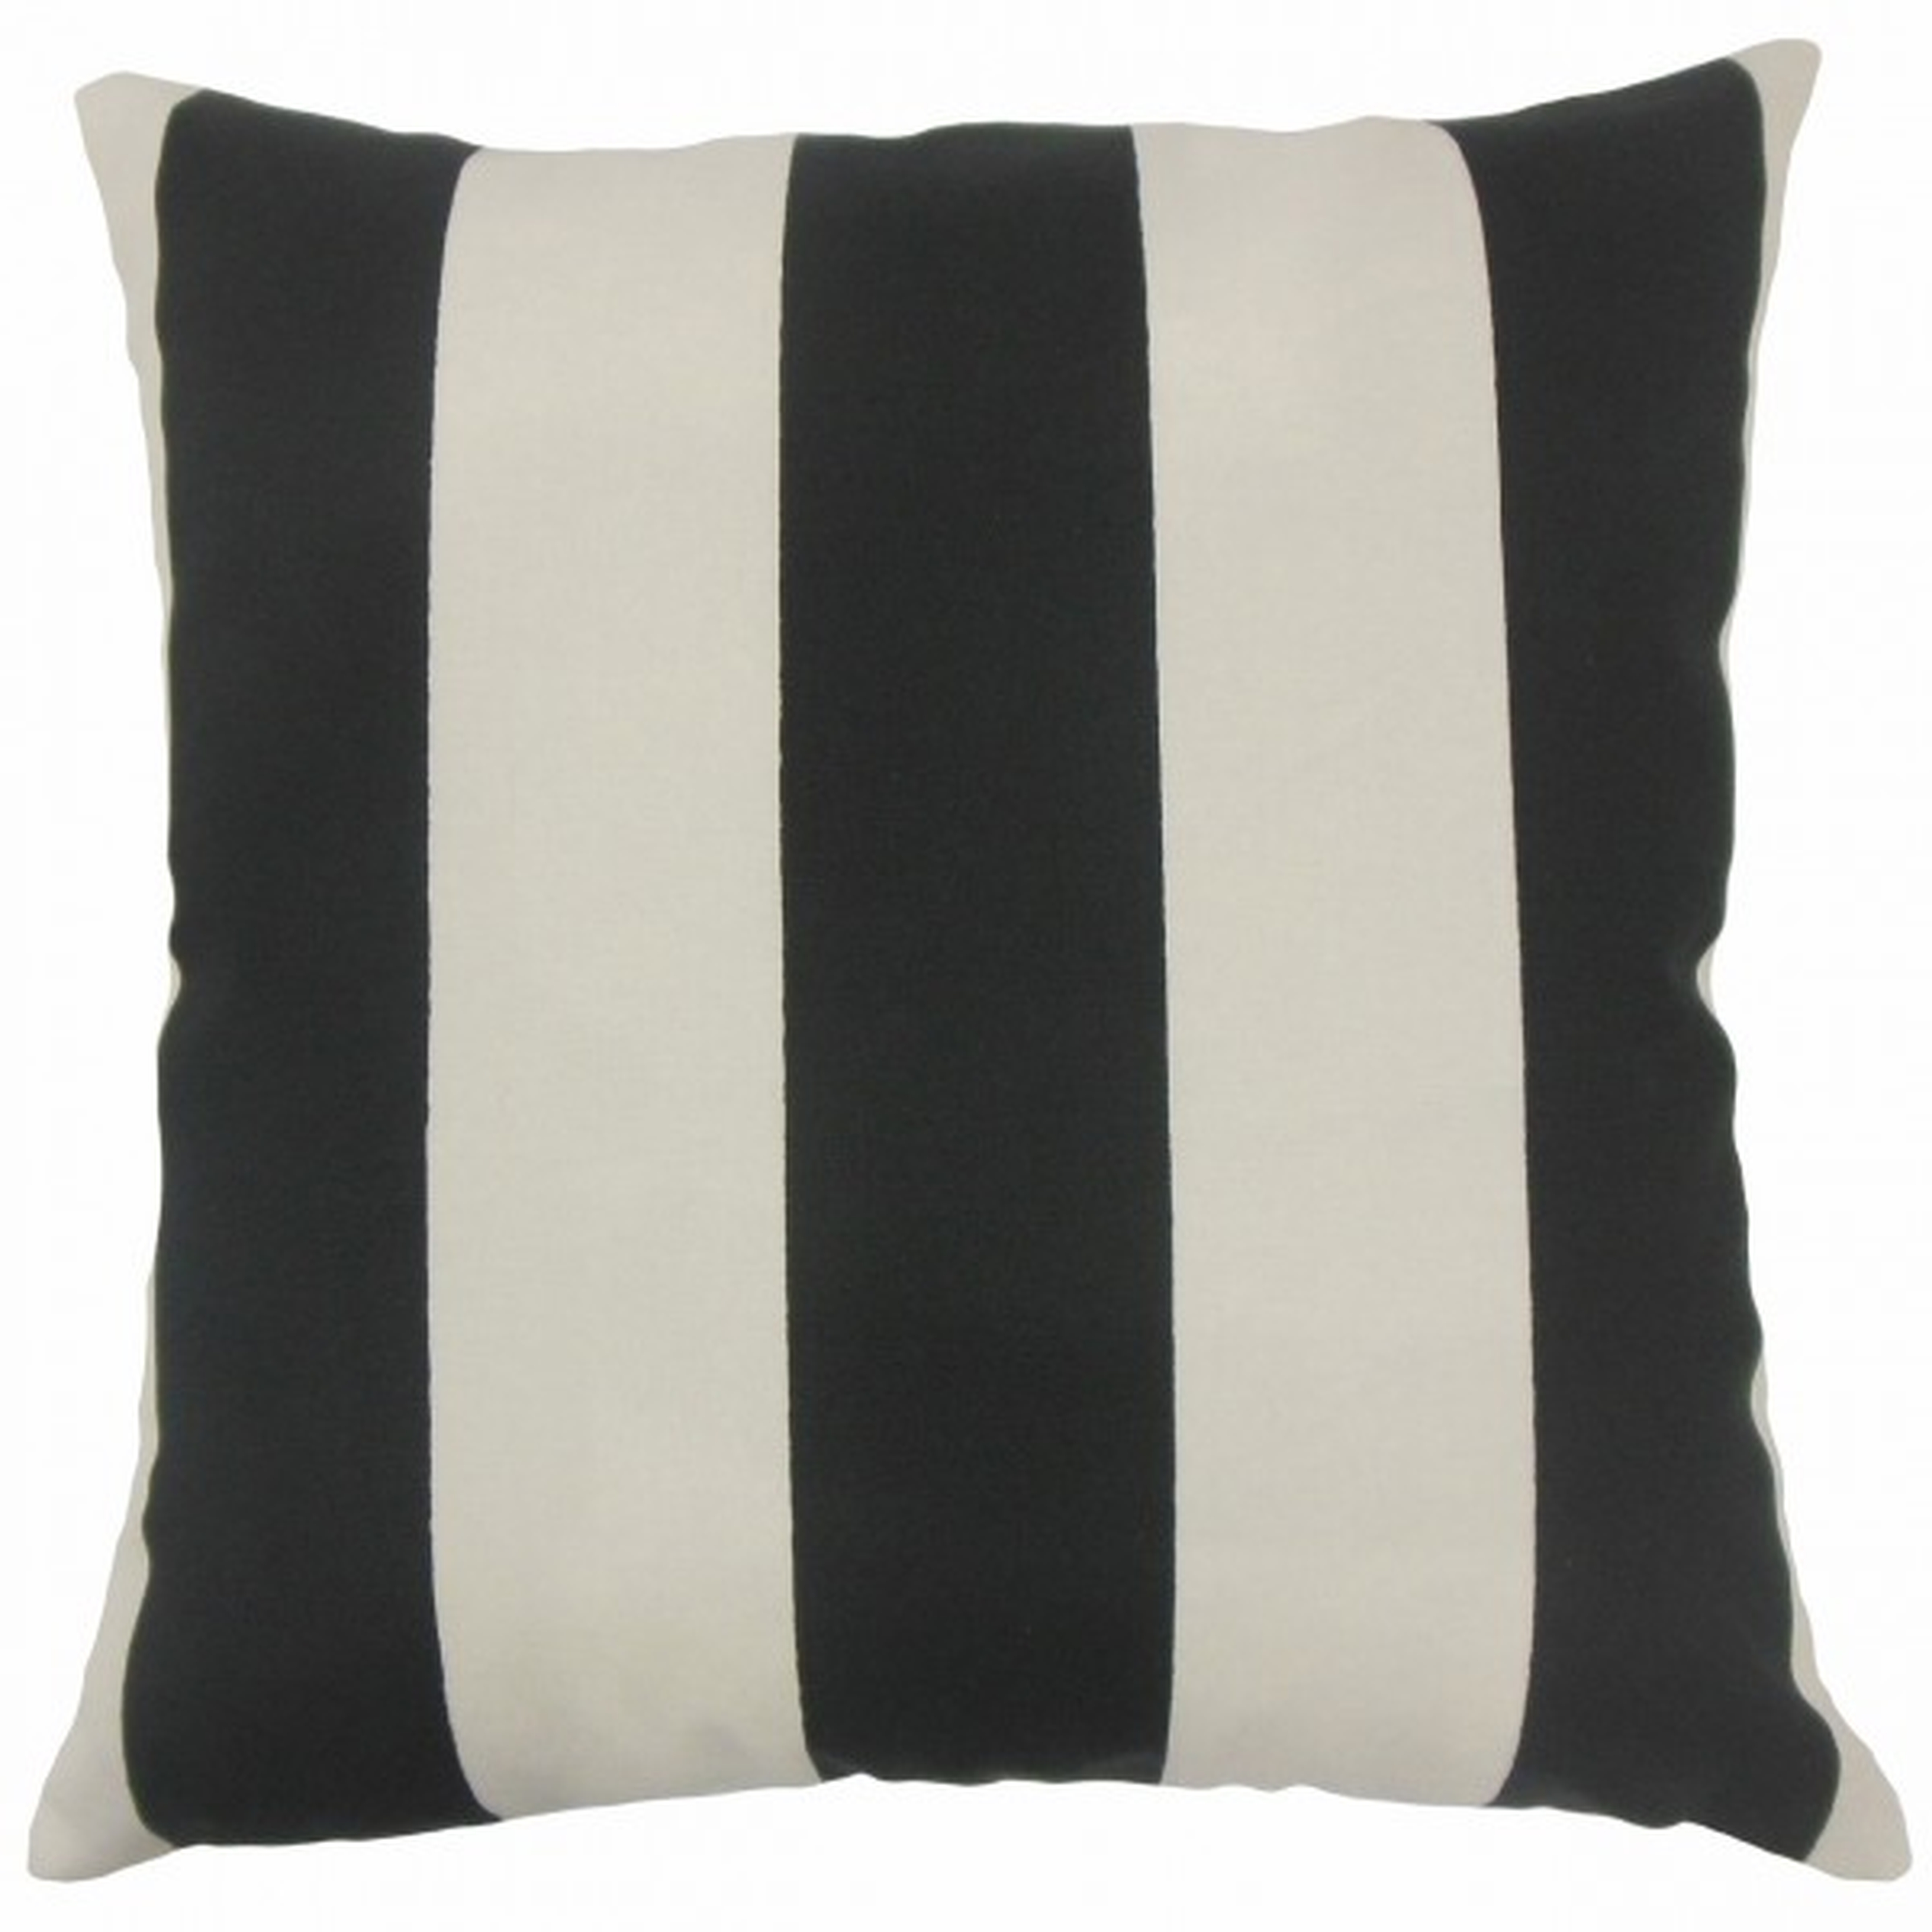 Kanha Striped Pillow Black Beachwood - 26"x26" With poly insert - Linen & Seam